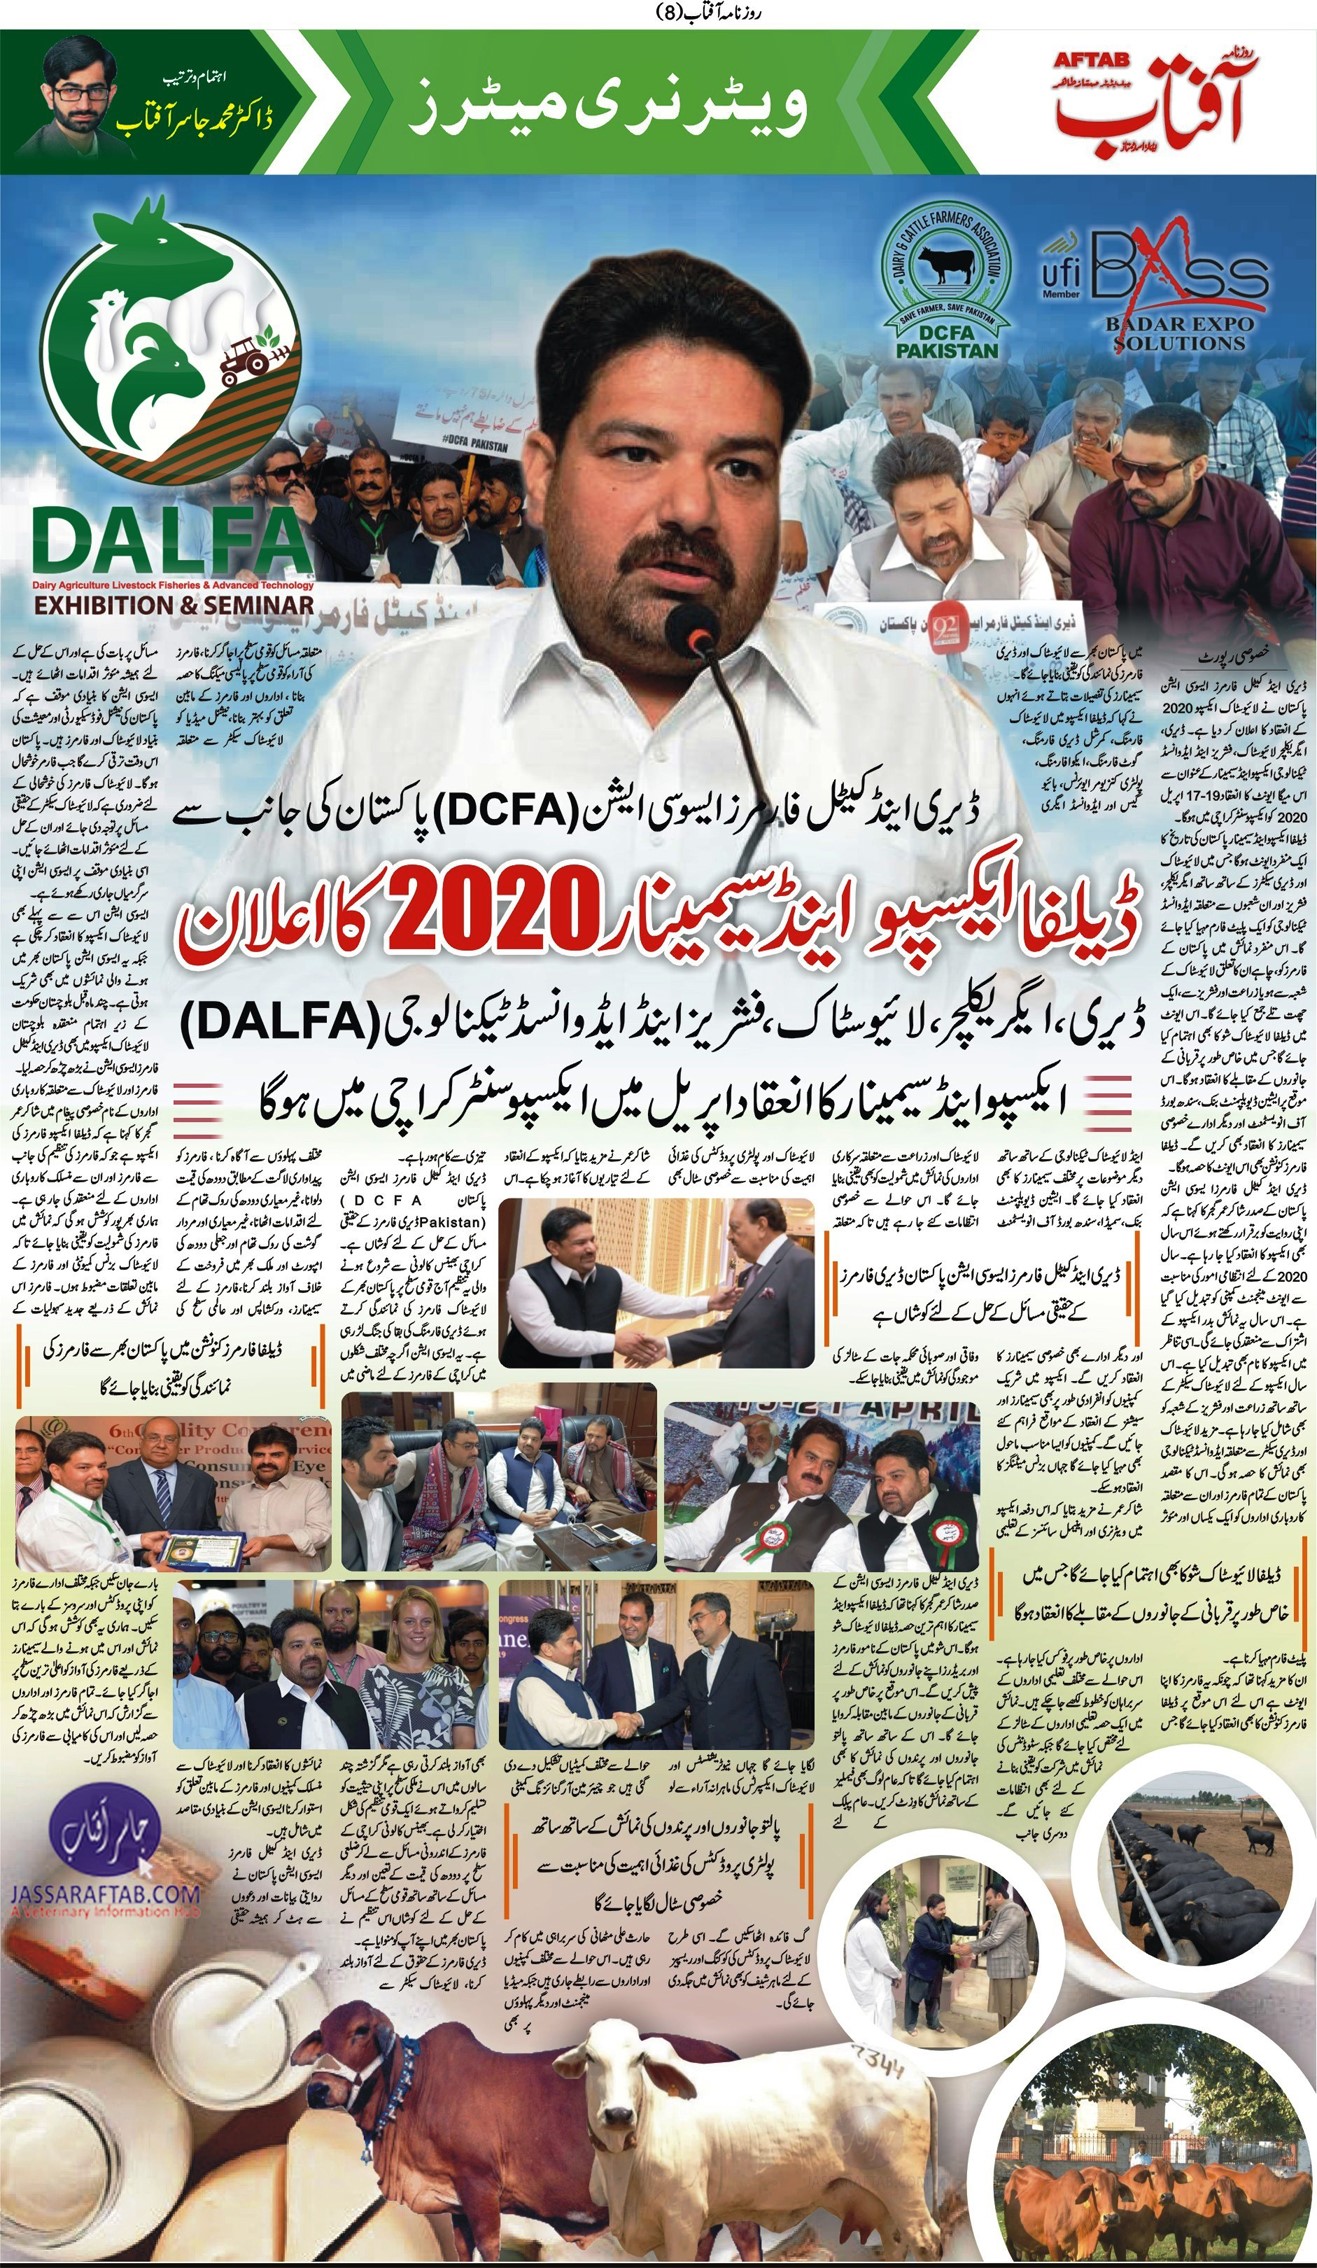 DCFA Pakistan announced DALFA Expo 